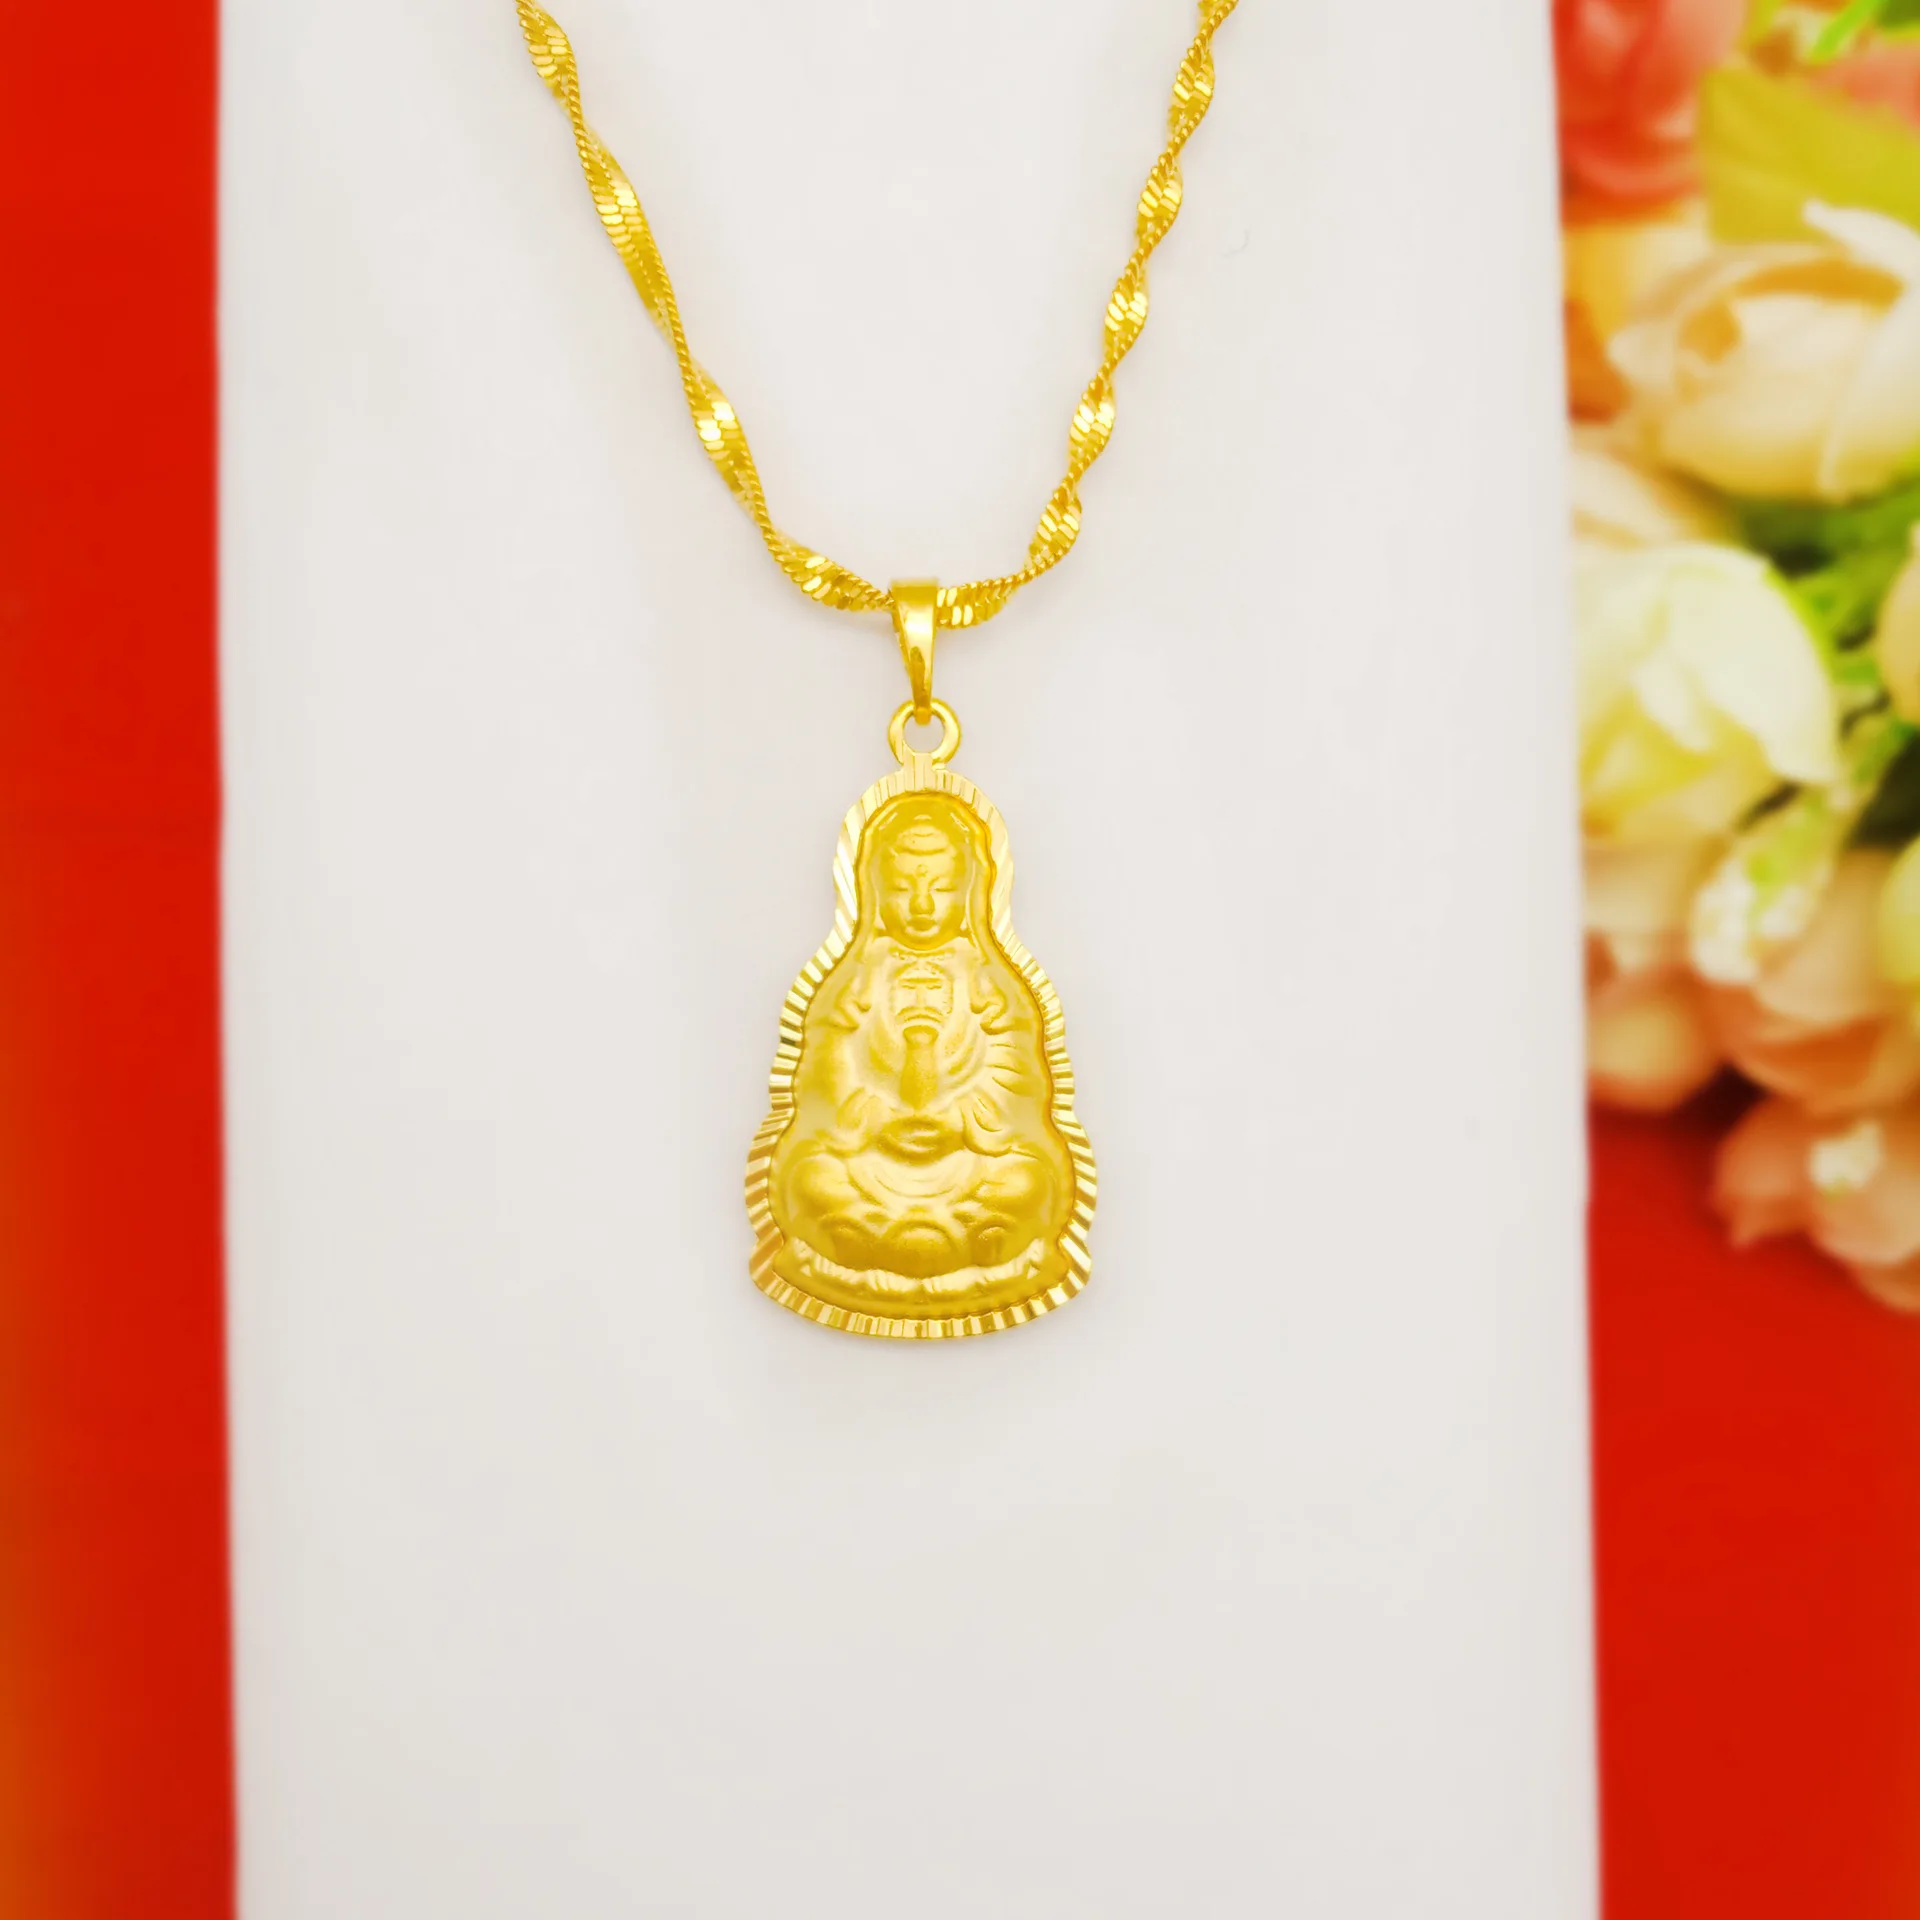 Luxury Fashion Gold Jewelry for Men Women Necklace www.1mrk.com